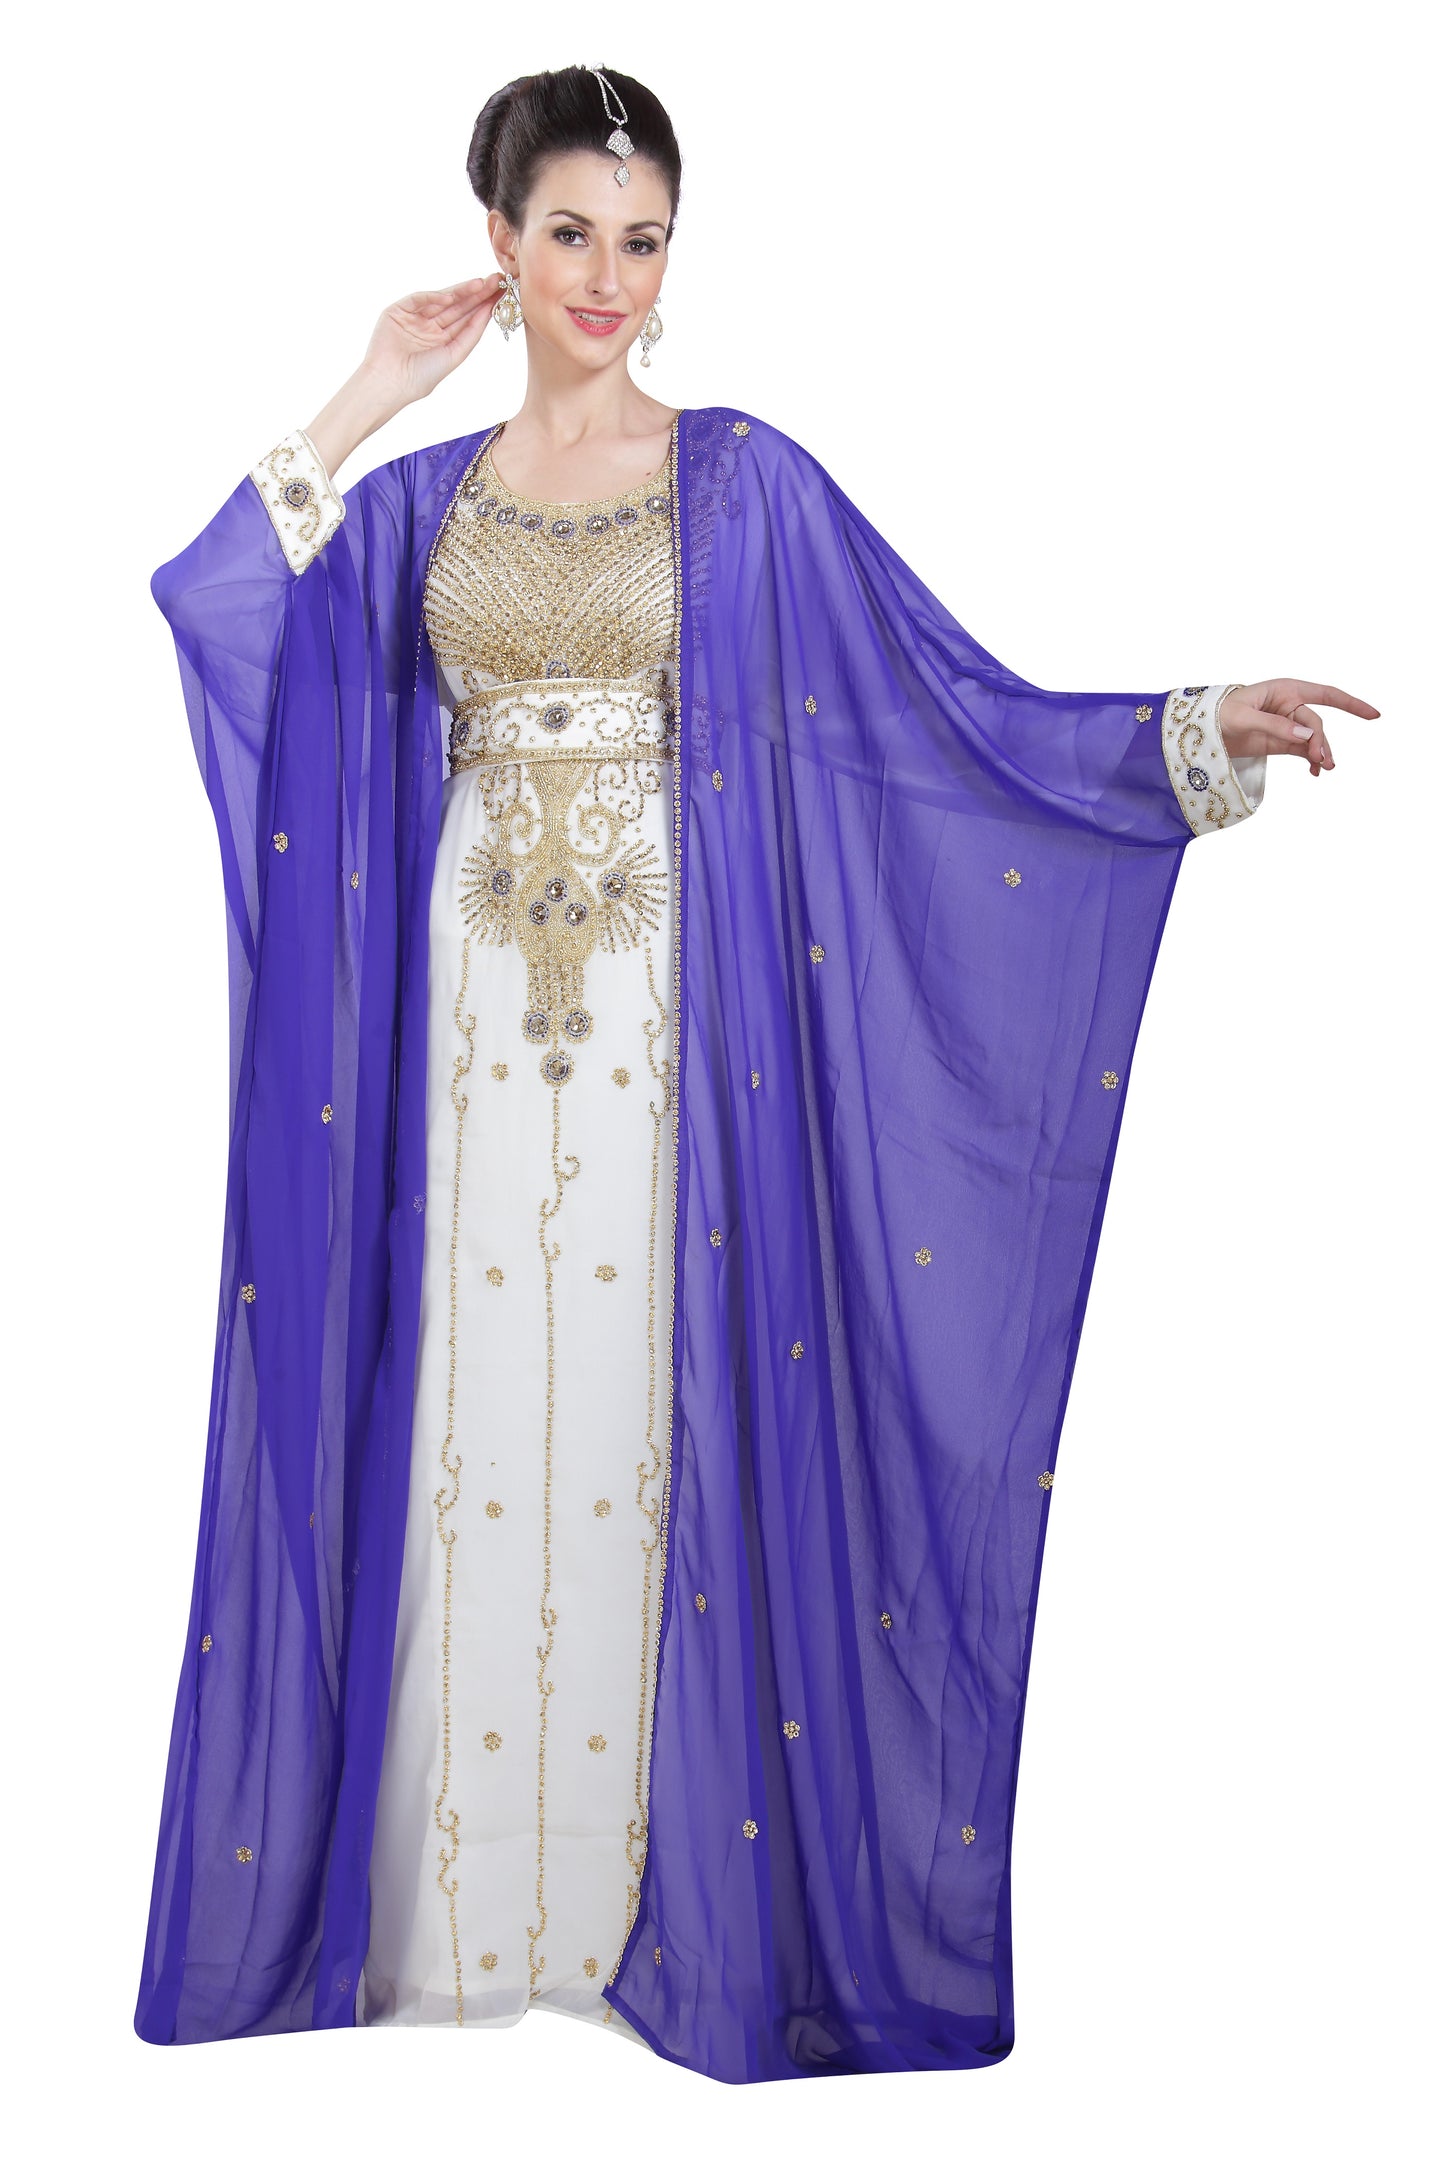 Arabian Farasha Long Sleeve Bollywood Studded Dress - Maxim Creation